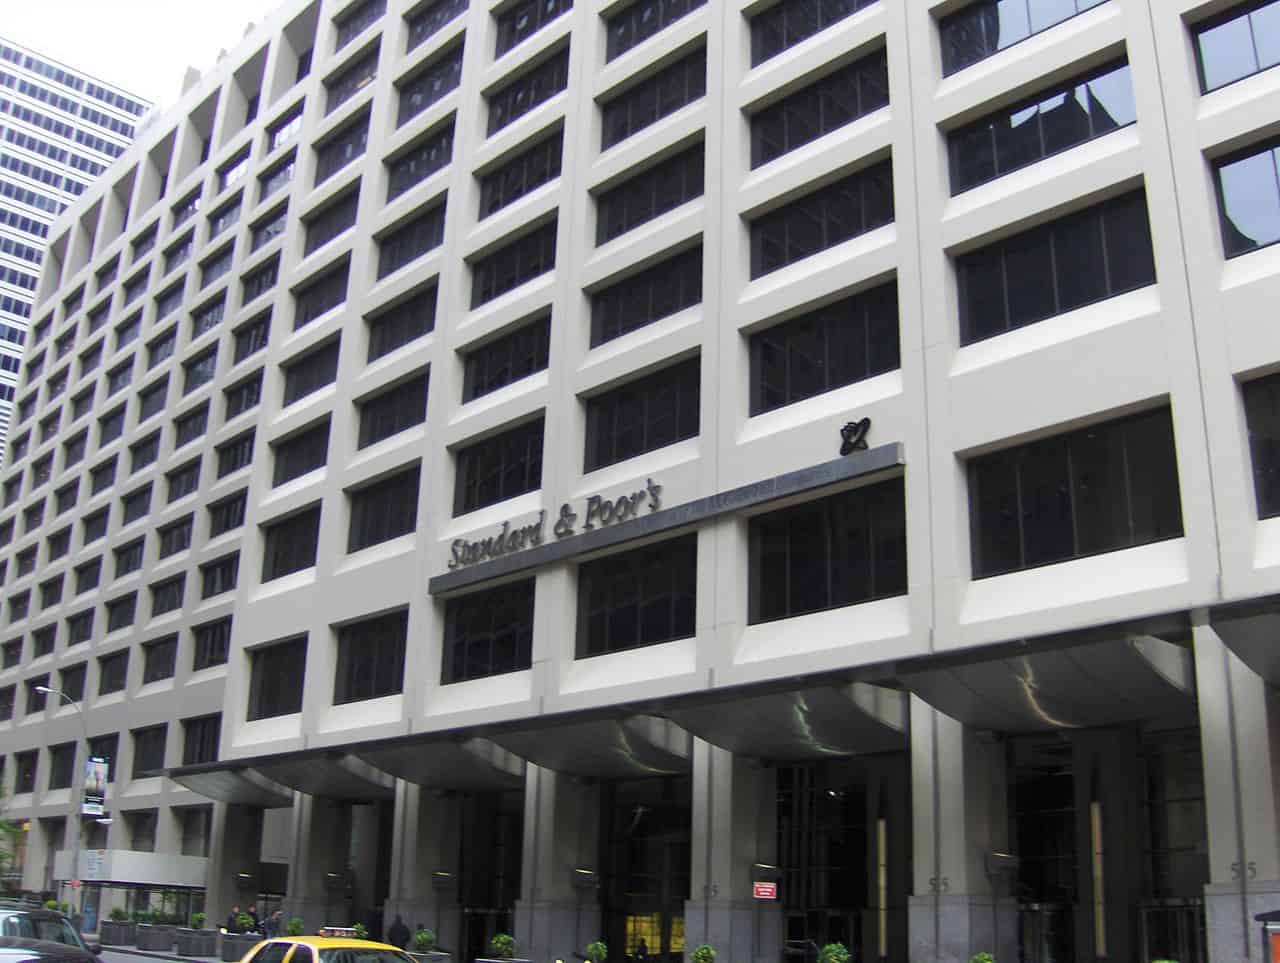 1280px-StandardPoors_Headquarters